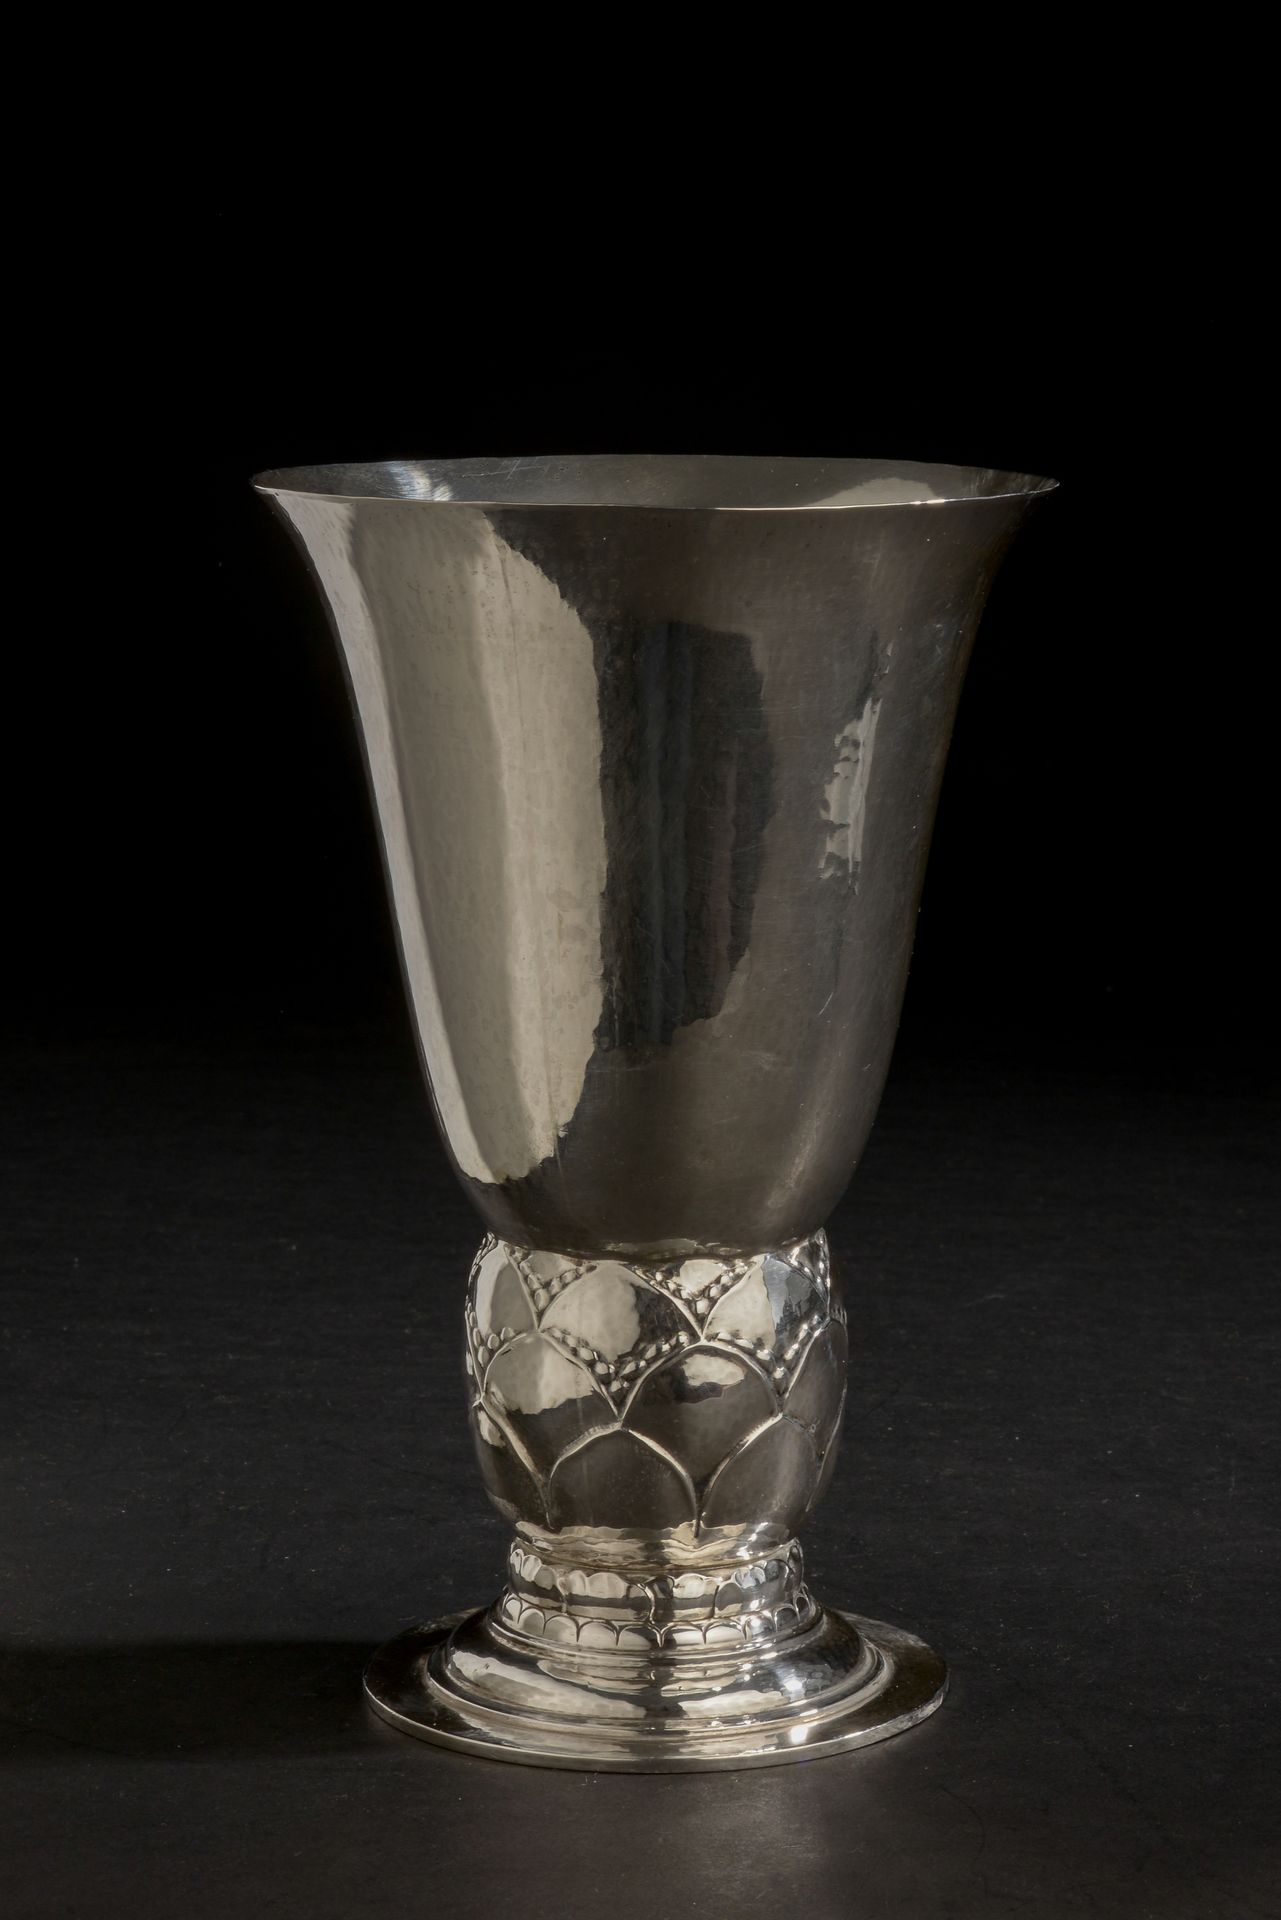 Null Georg JENSEN (Radvad, 1866 - Radvad, 1935).
Vaso in argento martellato con &hellip;